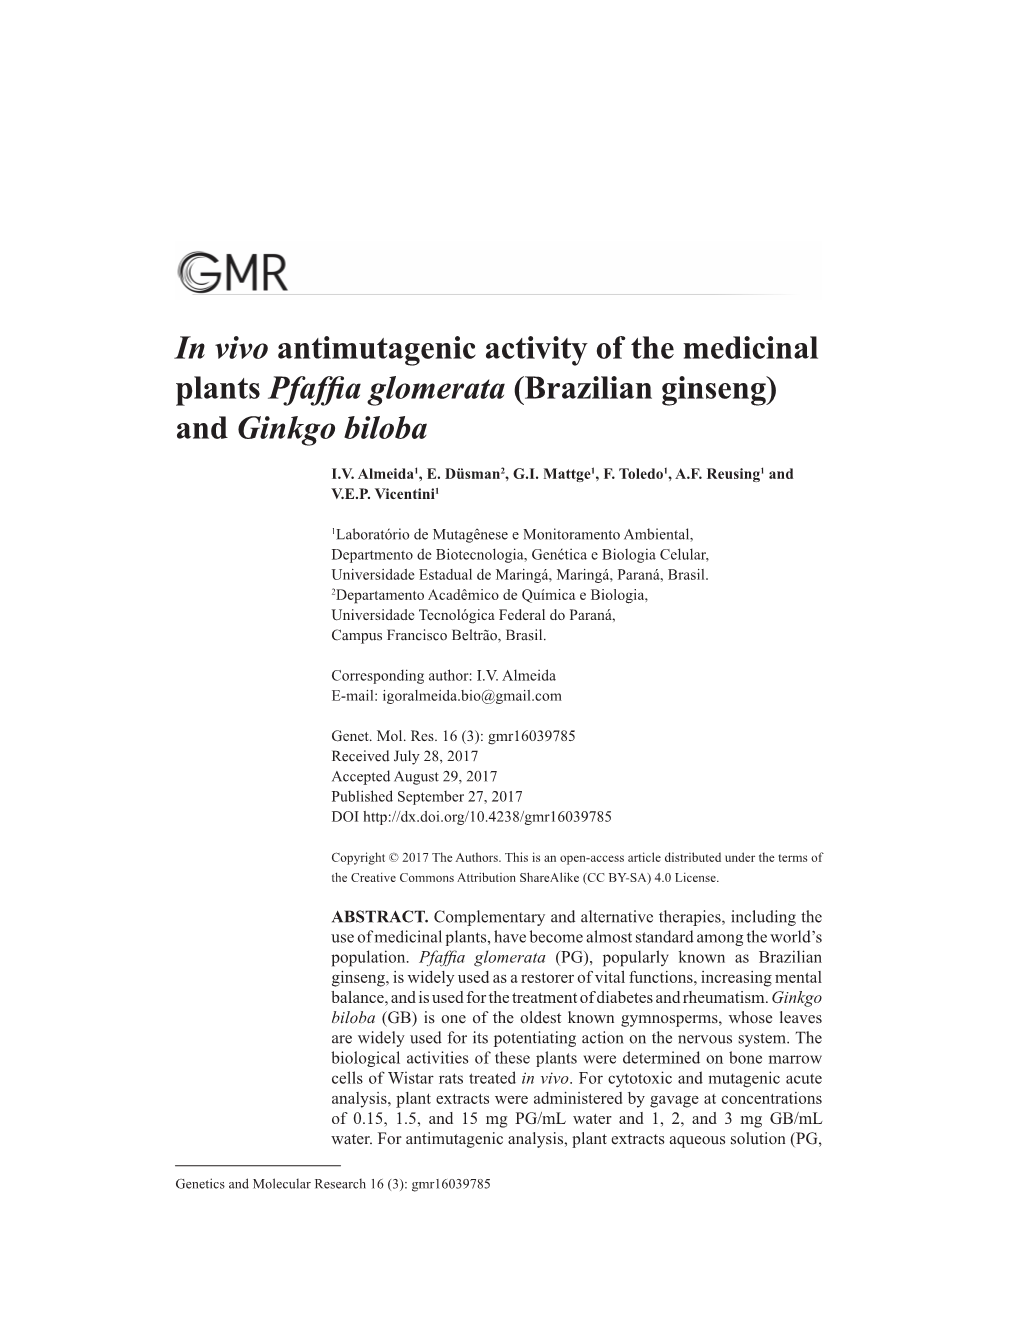 In Vivo Antimutagenic Activity of the Medicinal Plants Pfaffia Glomerata (Brazilian Ginseng) and Ginkgo Biloba